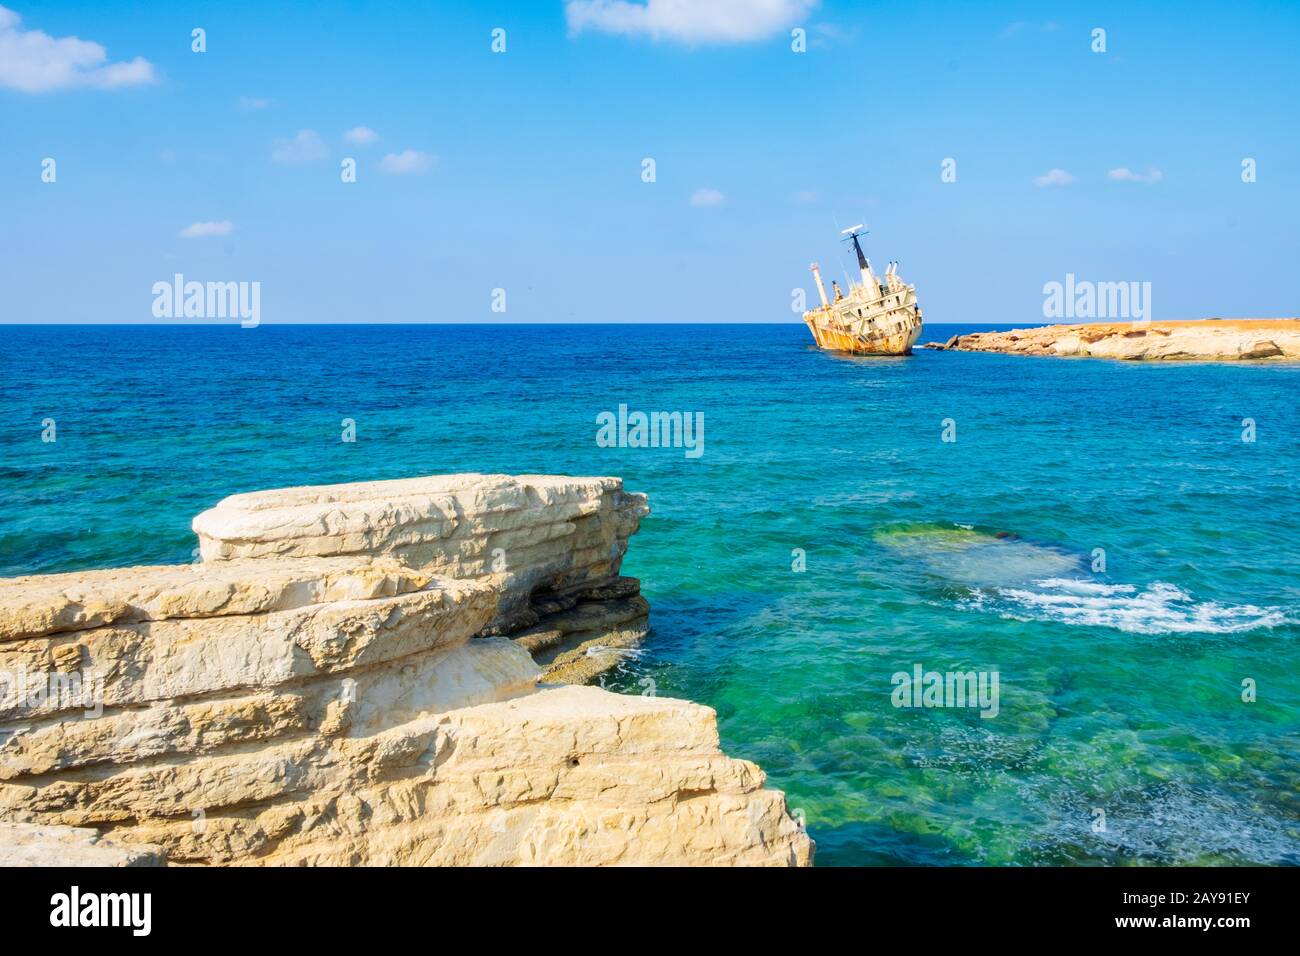 Abandoned rusty ship wreck EDRO III in Pegeia, Paphos, Cyprus. Stock Photo